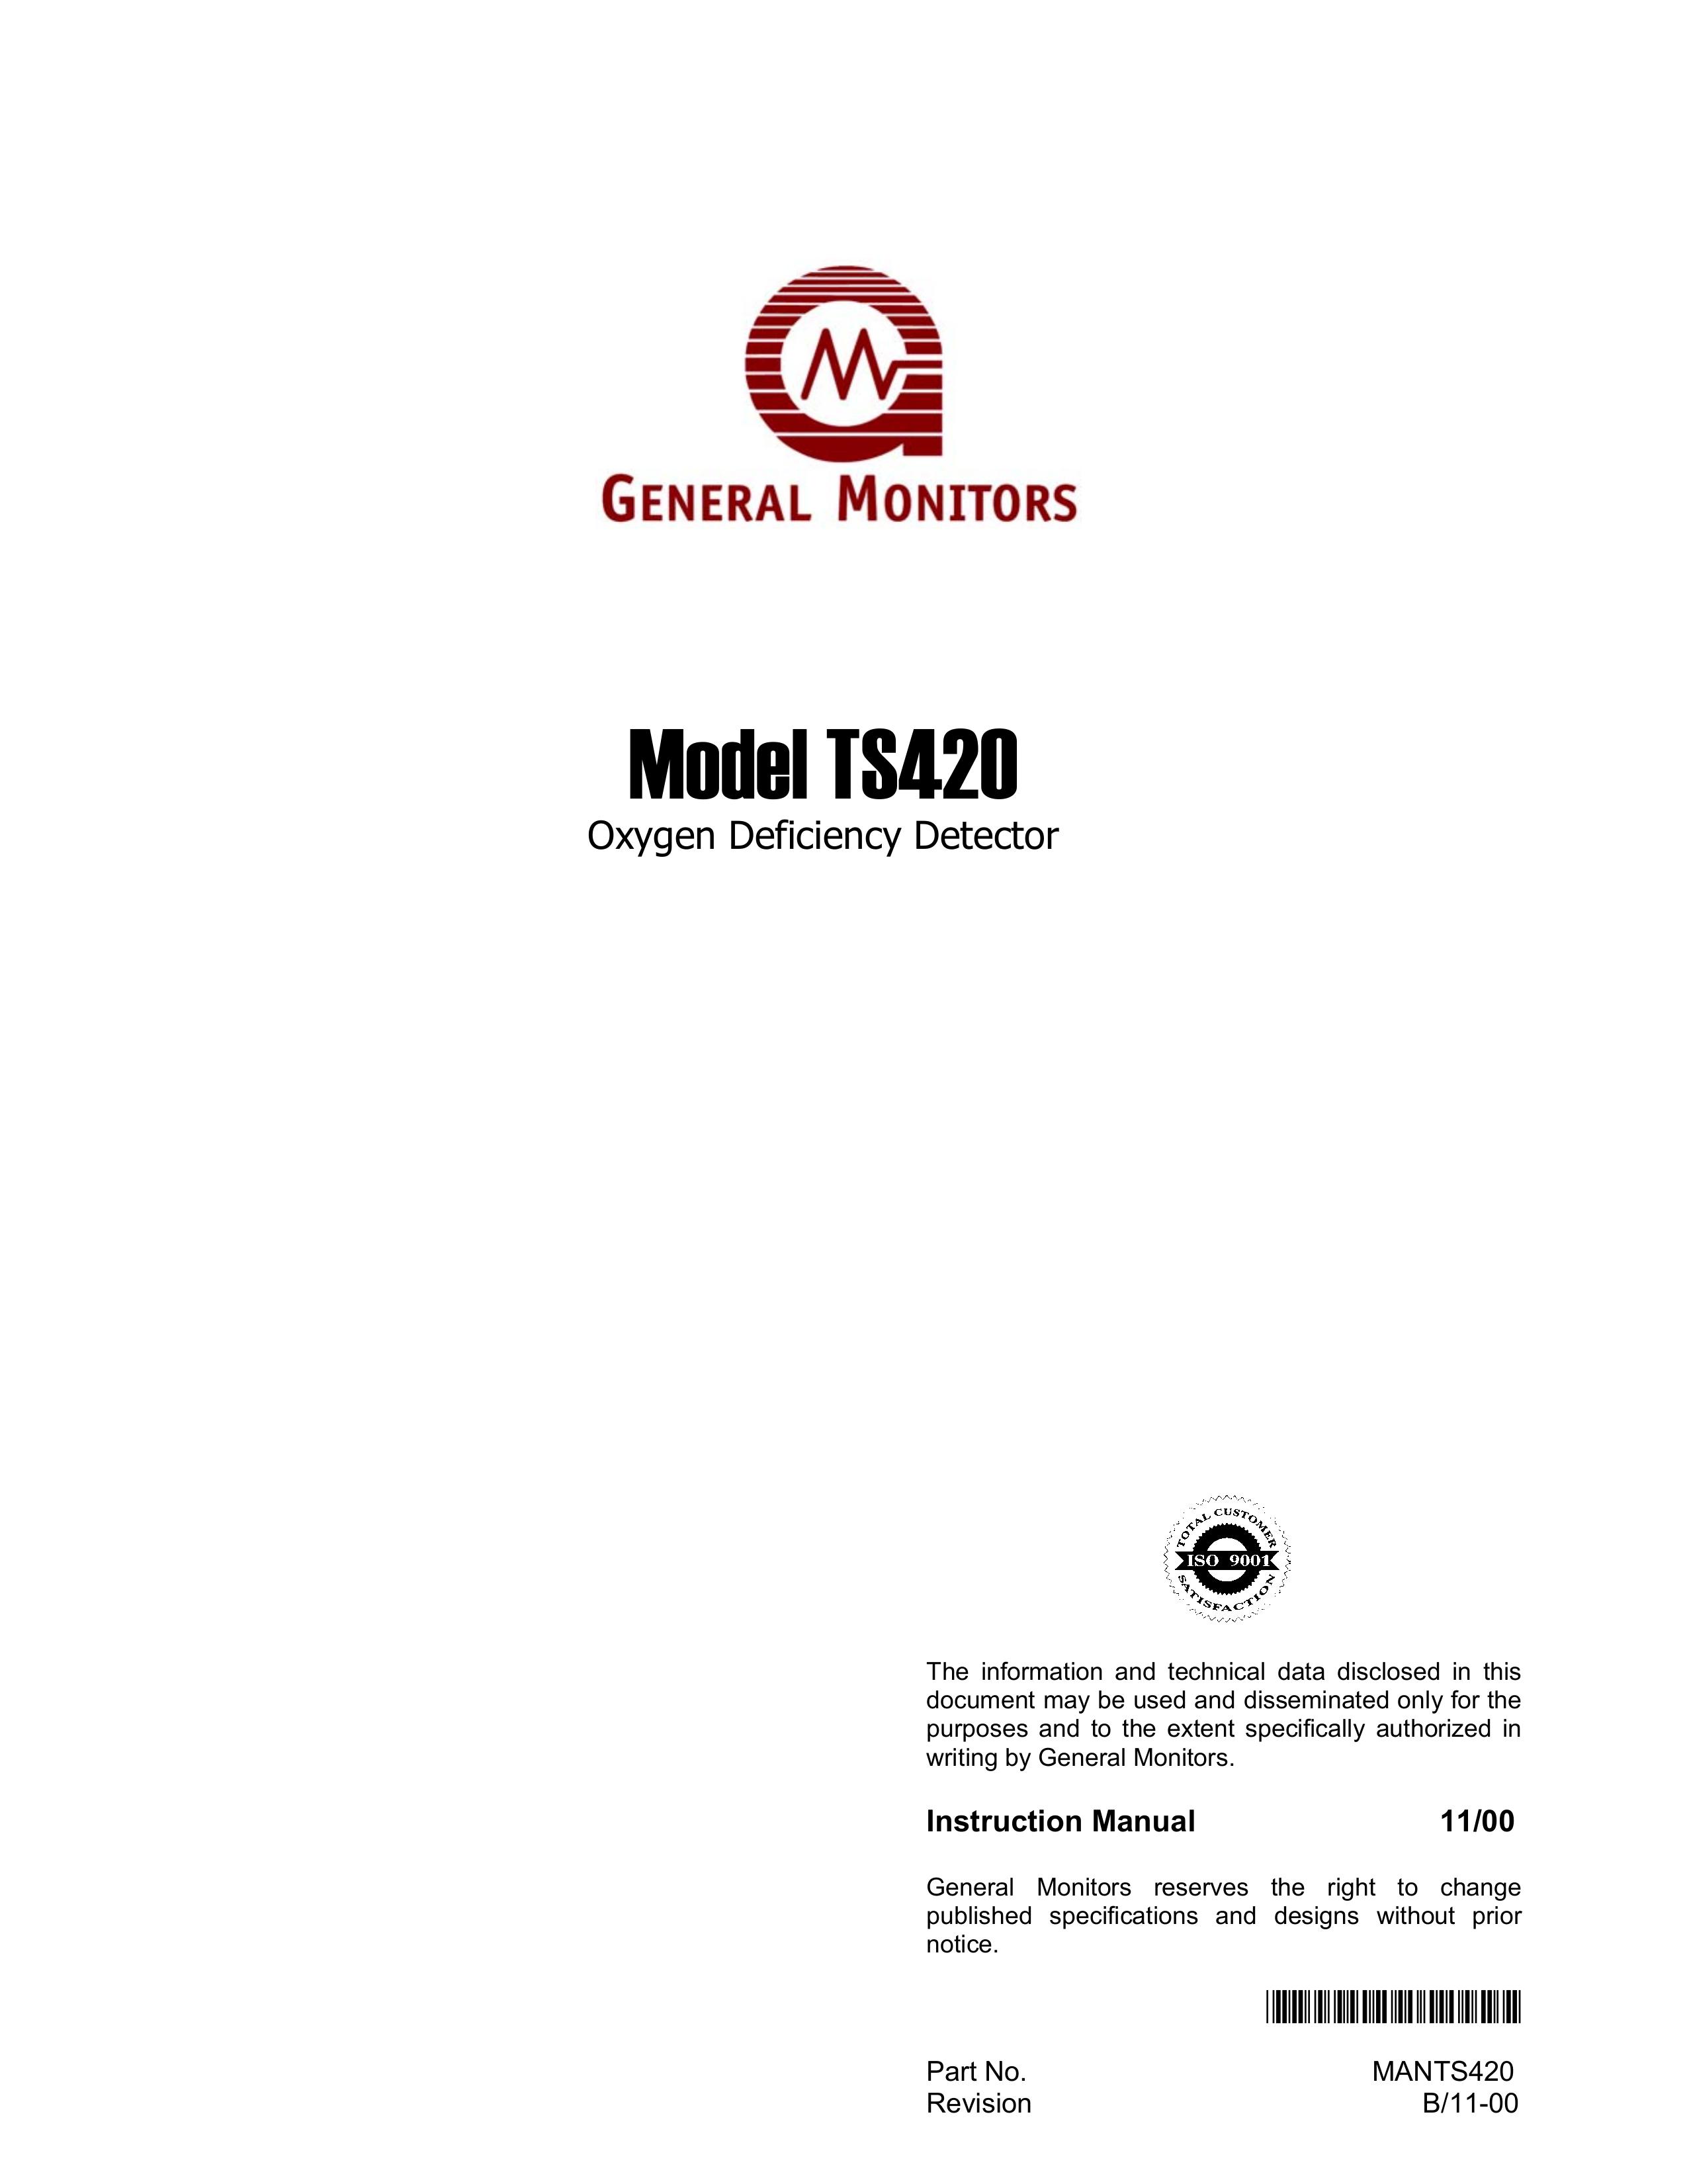 GM MANTS420 Oxygen Equipment User Manual